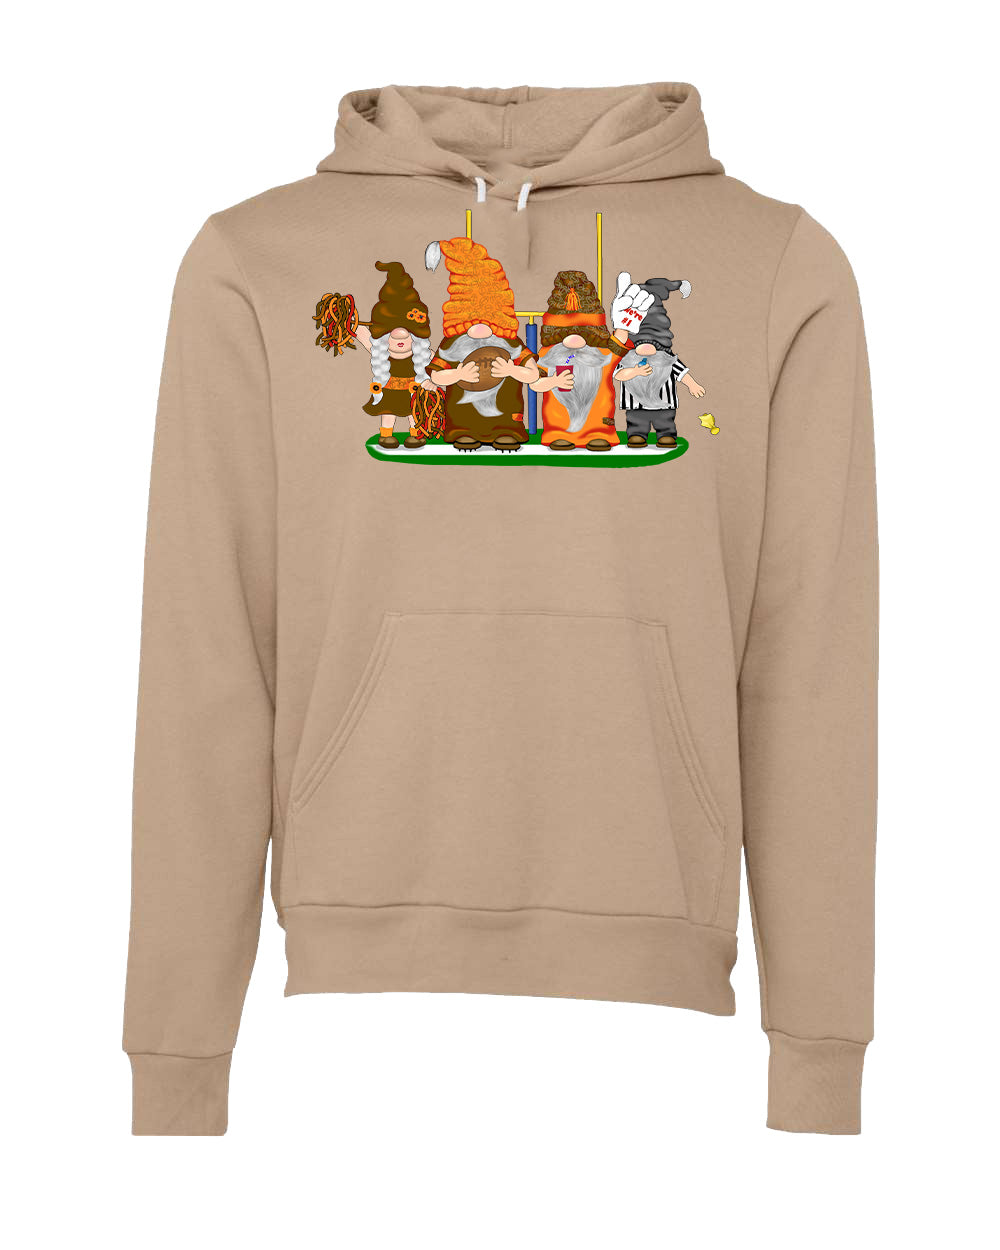 Orange & Brown Football Gnomes (similar to Cleveland) on Unisex Hoodie